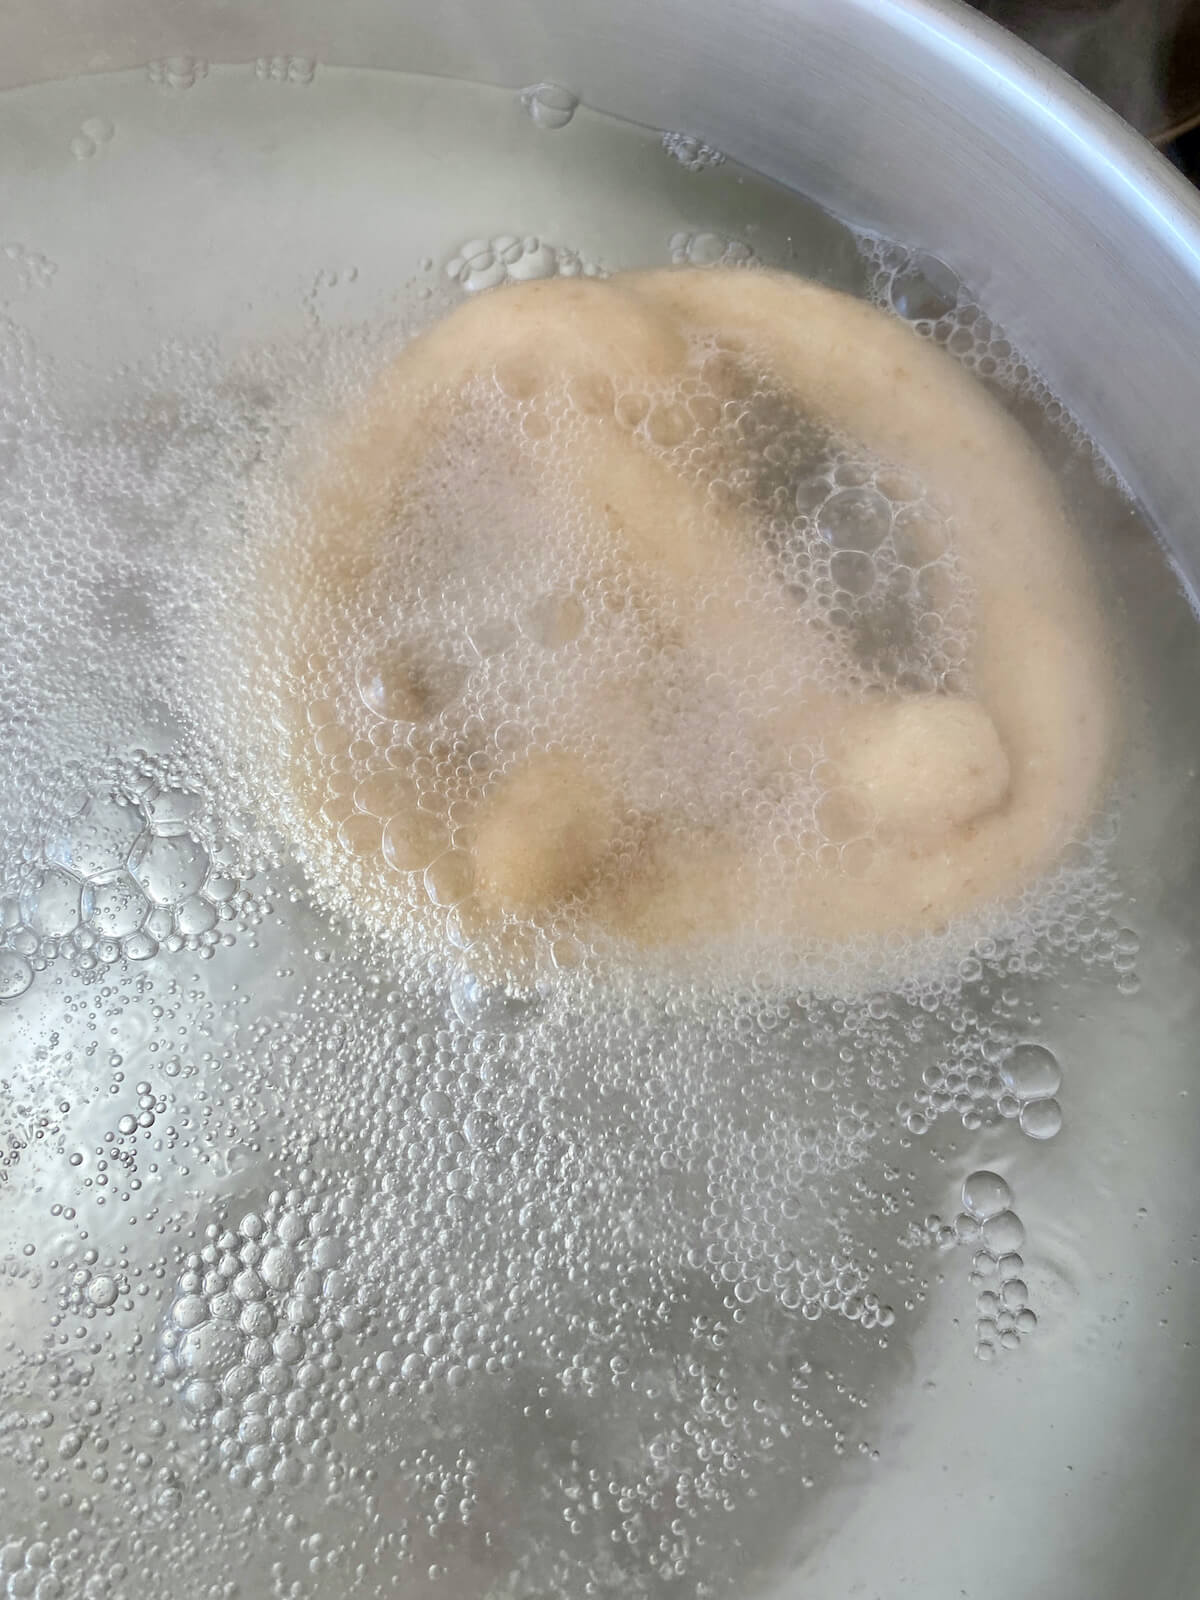 A soft pretzel boiling in a baking soda water bath.